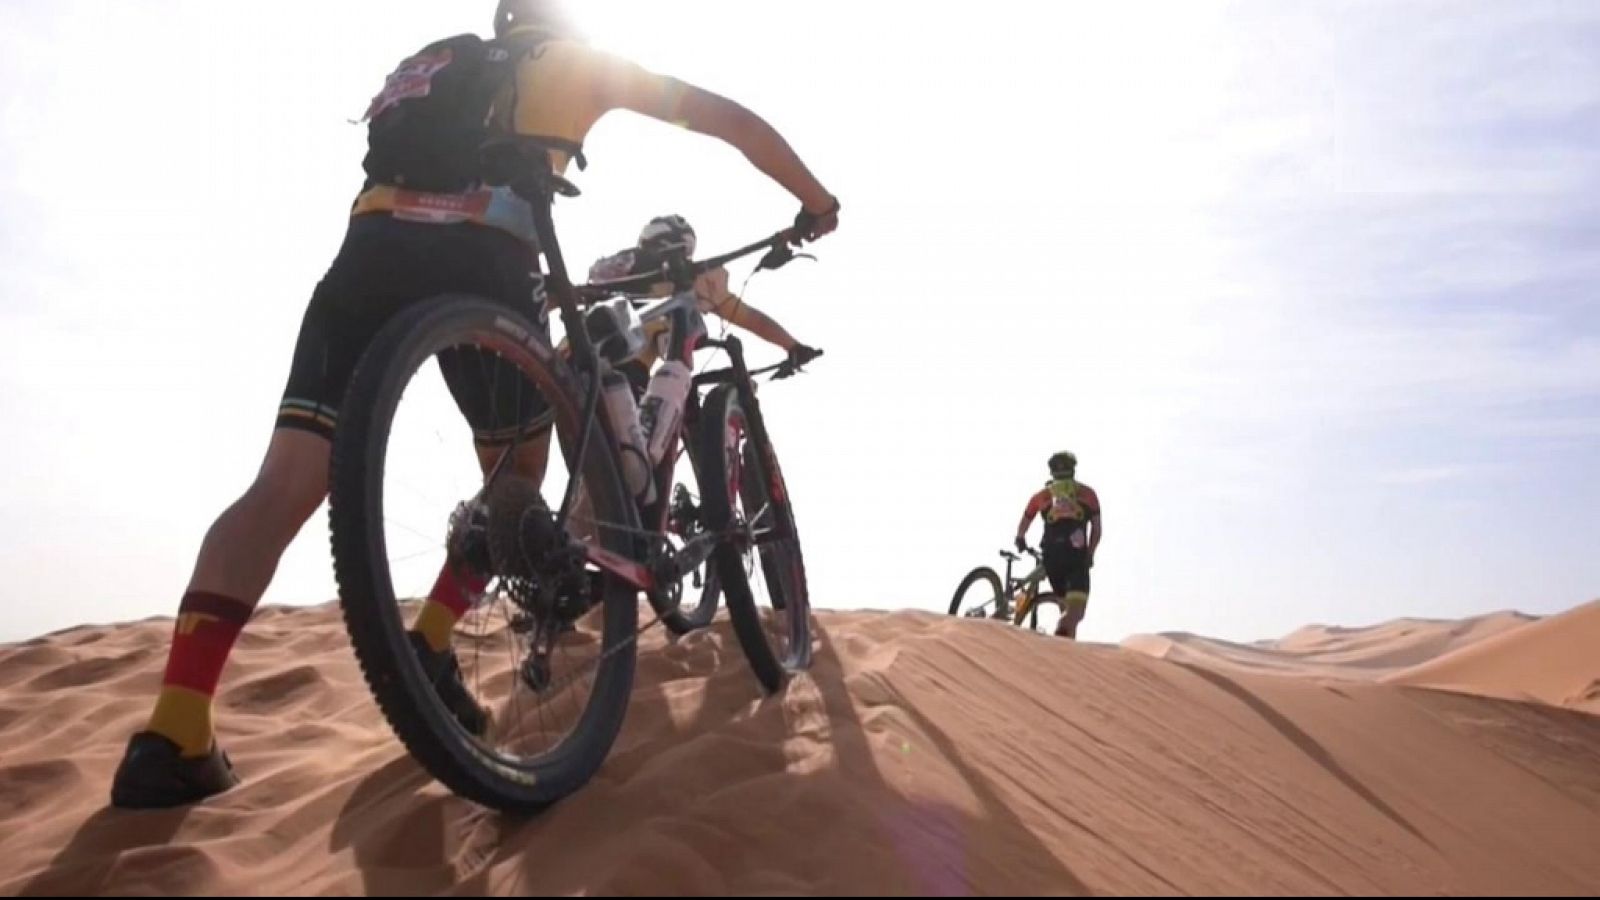 Mountain Bike - Titán Desert 2019. Resumen final